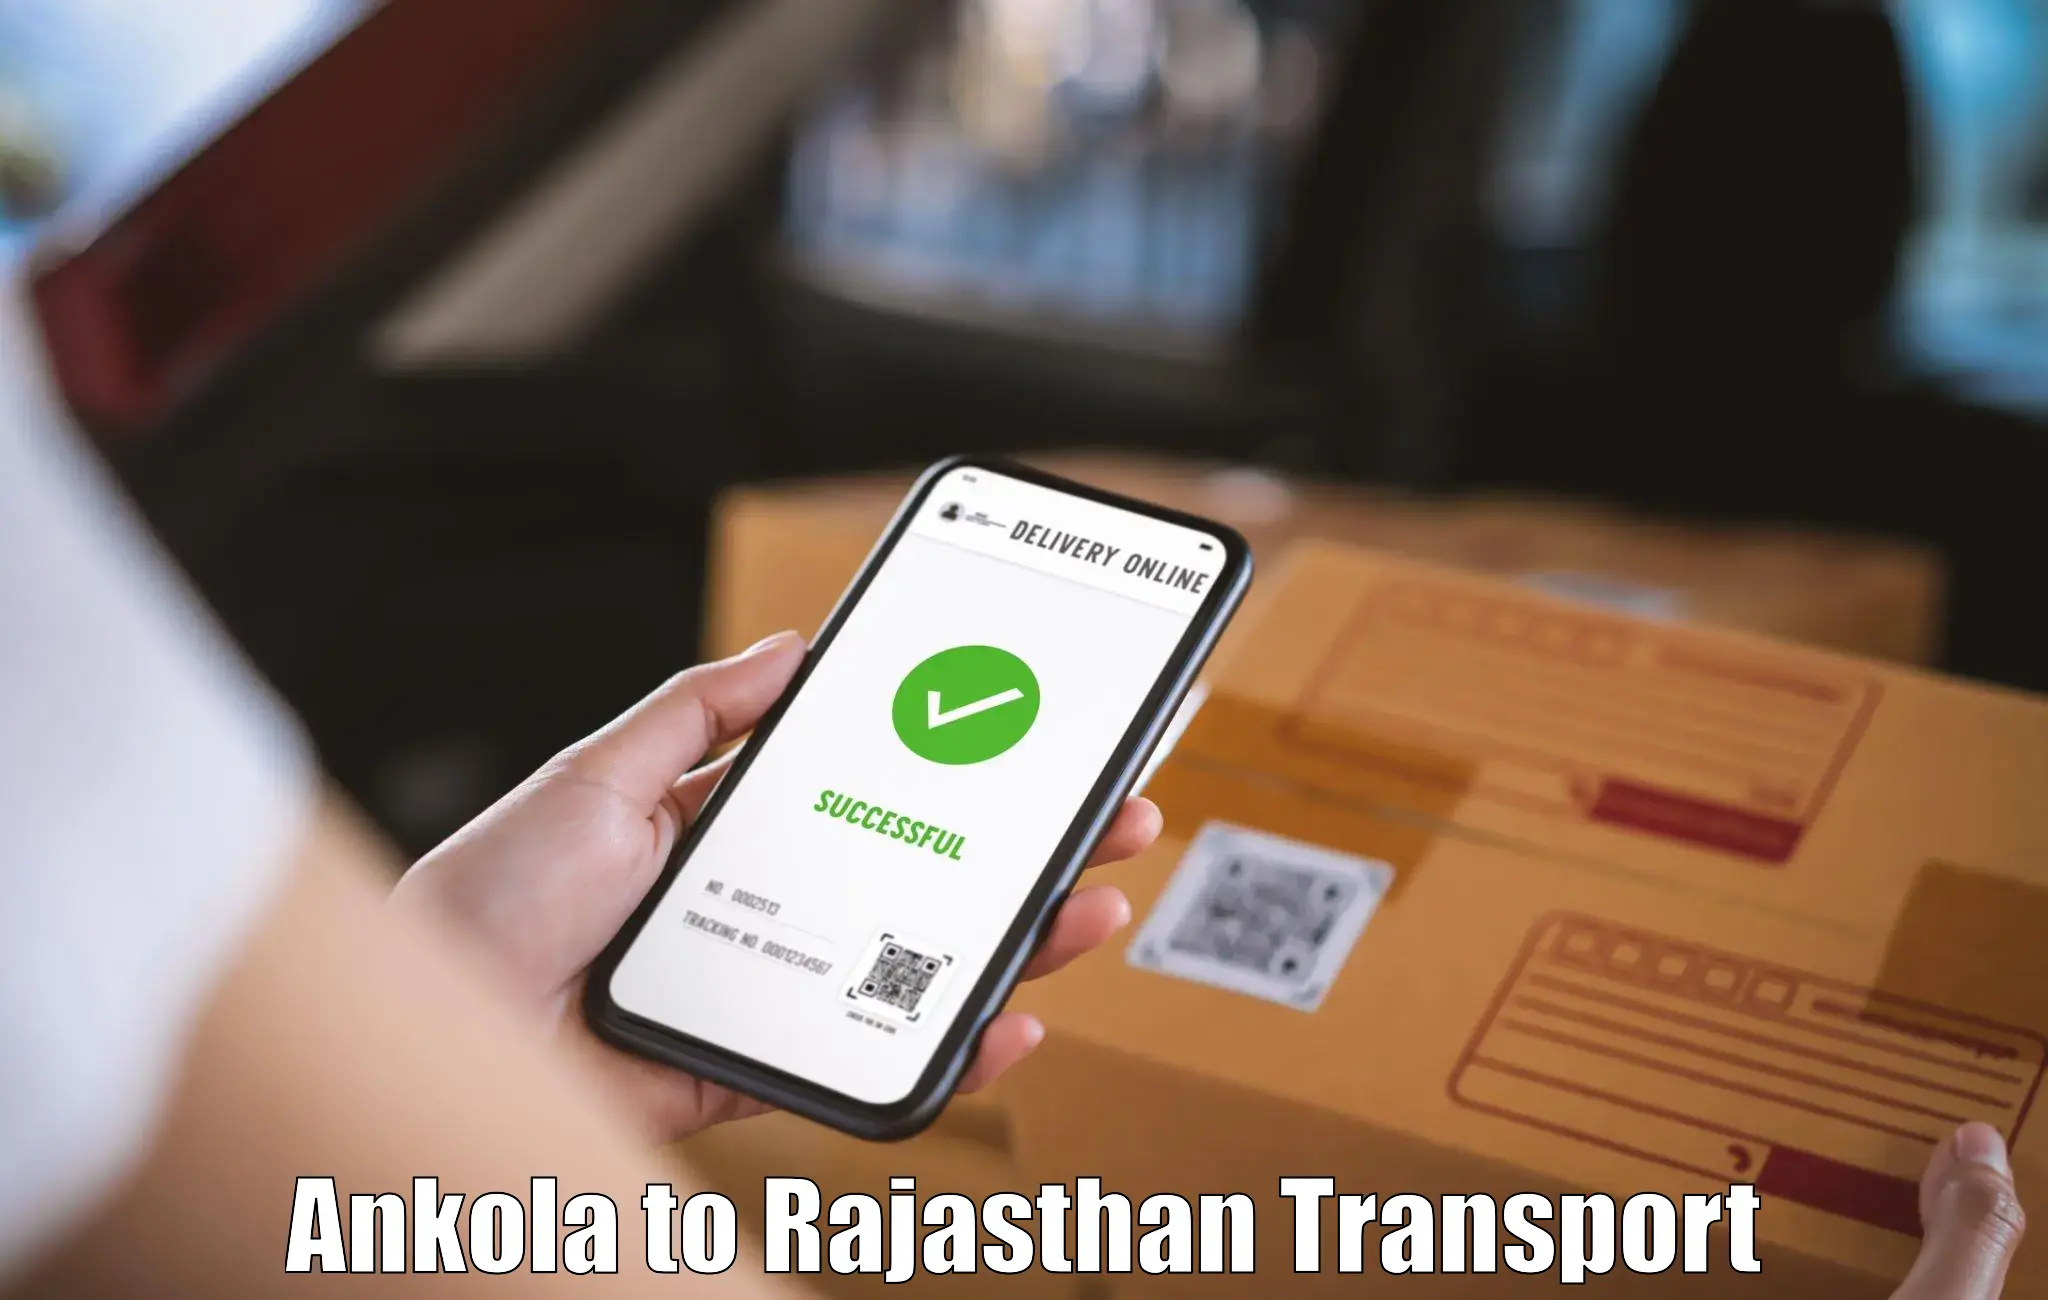 All India transport service Ankola to Jaipur